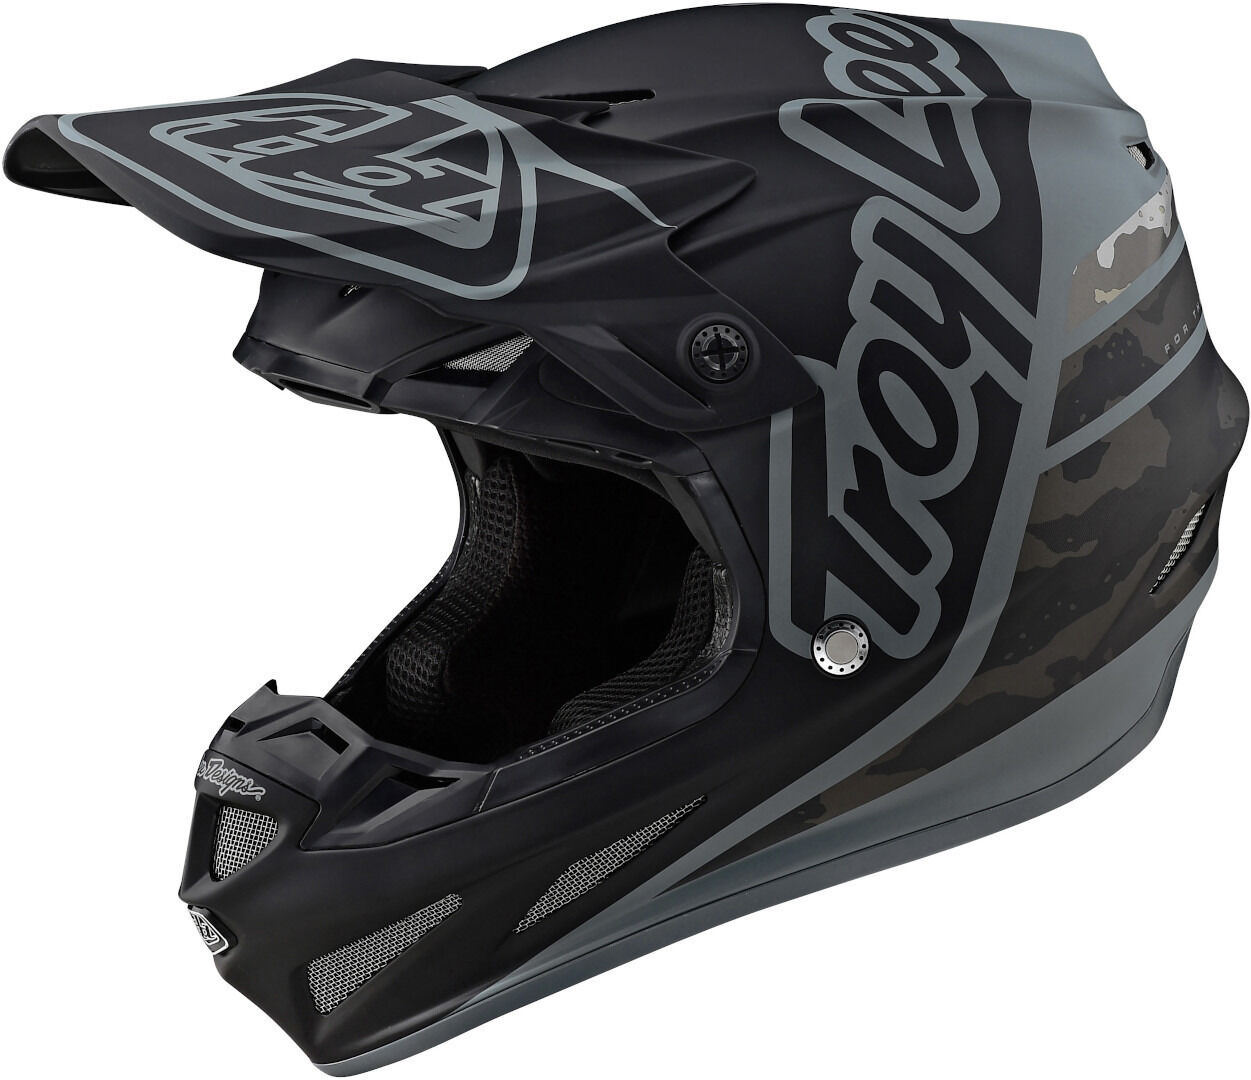 Lee SE4 Silhouette MIPS Casco de Motocross - Negro (XL)